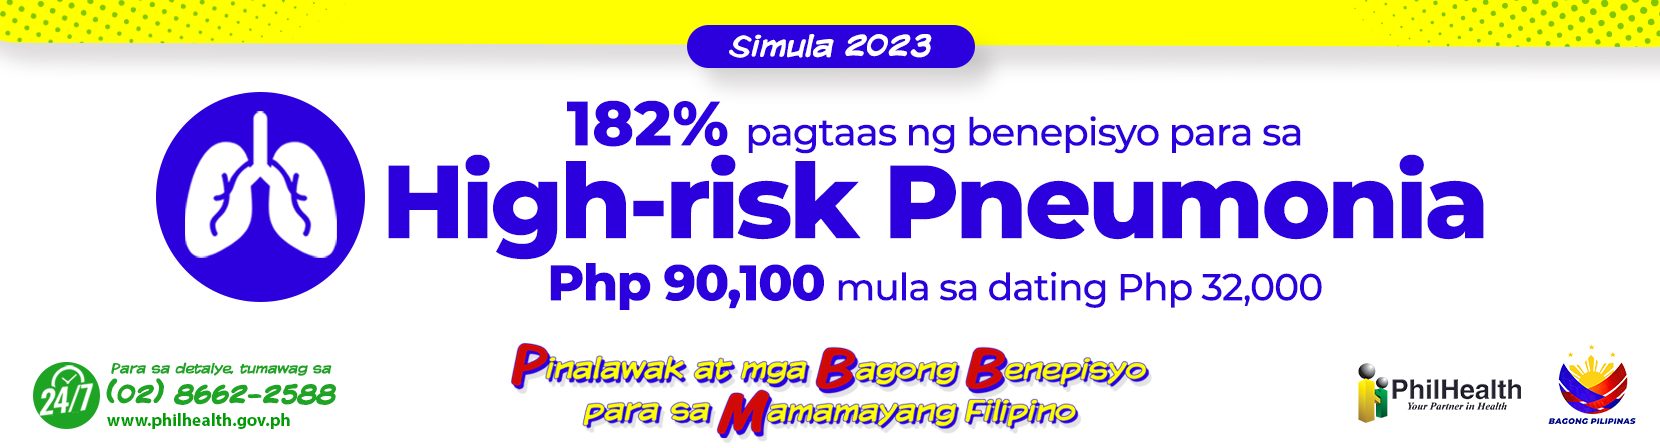 Simula 2023 - High Risk